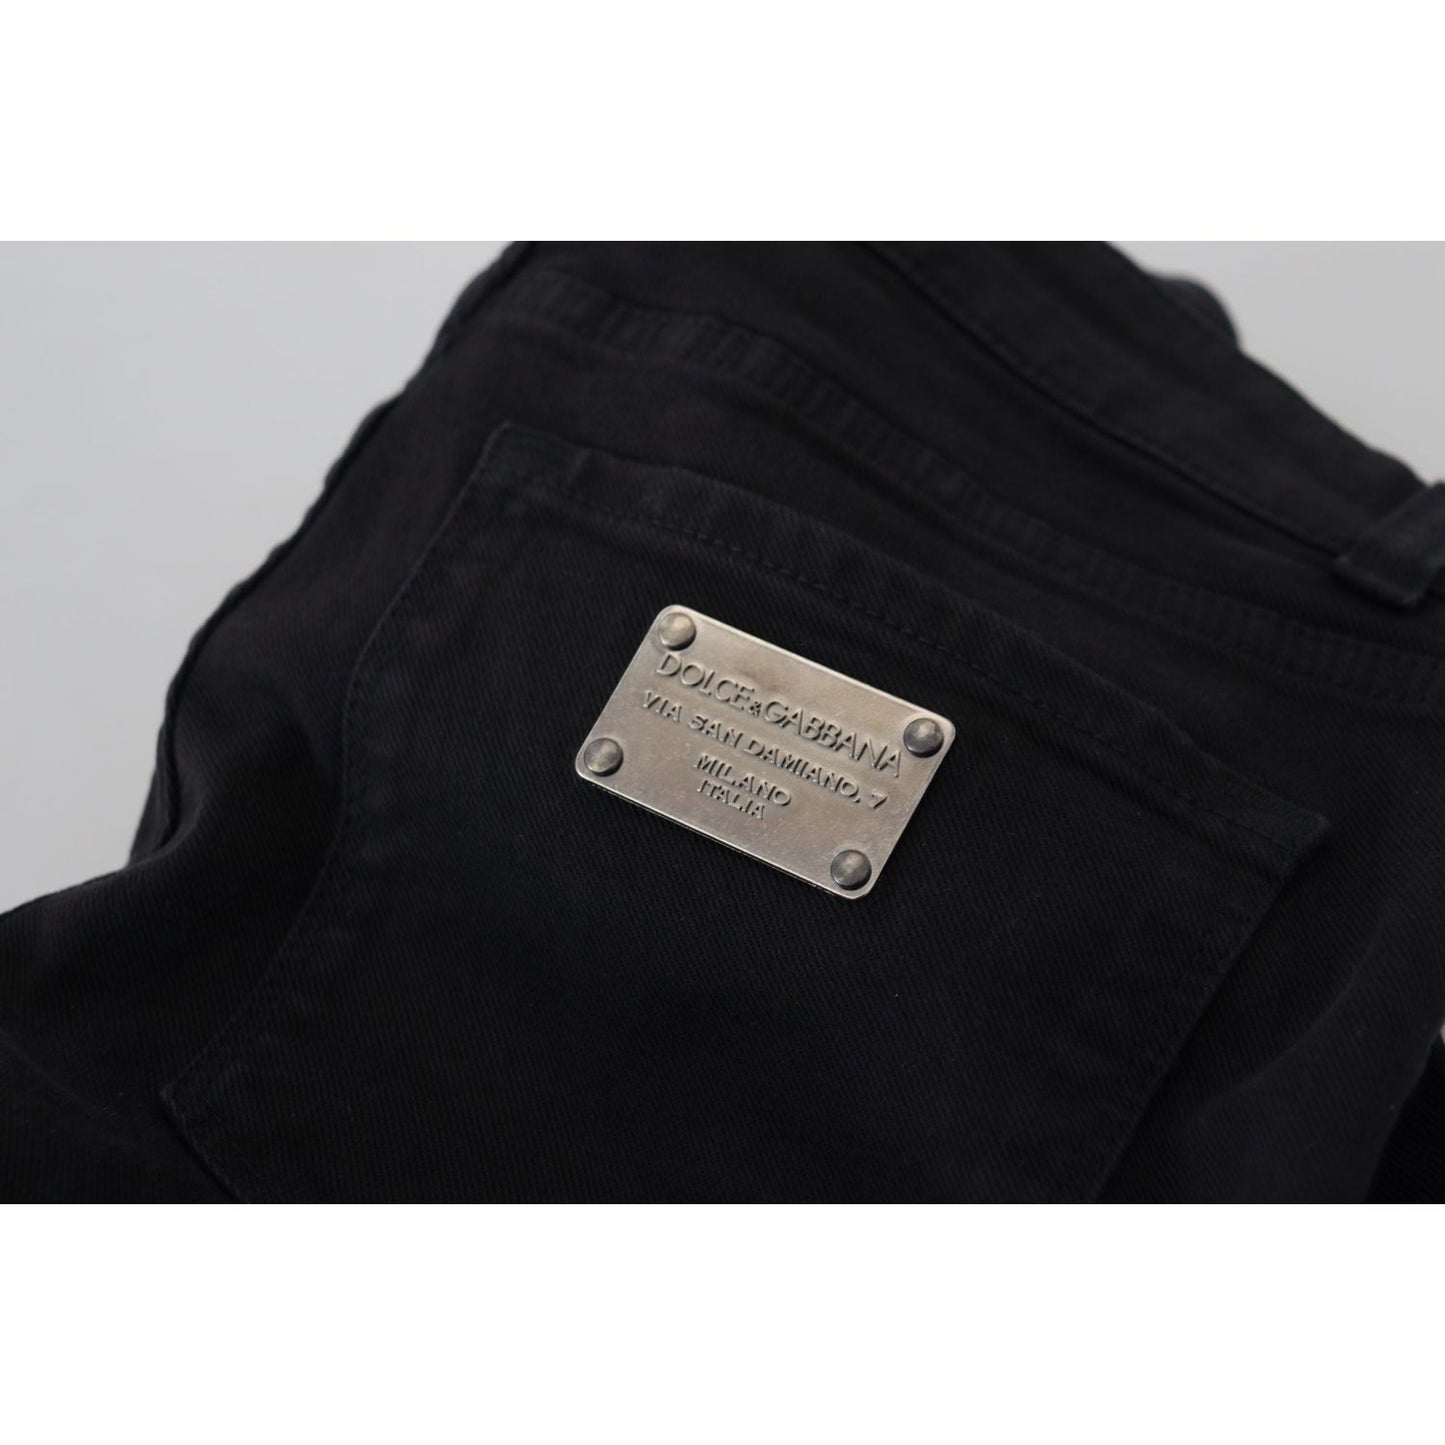 Dolce & Gabbana Elegant Black Denim Pants black-cotton-skinny-mid-waist-denim-jeans